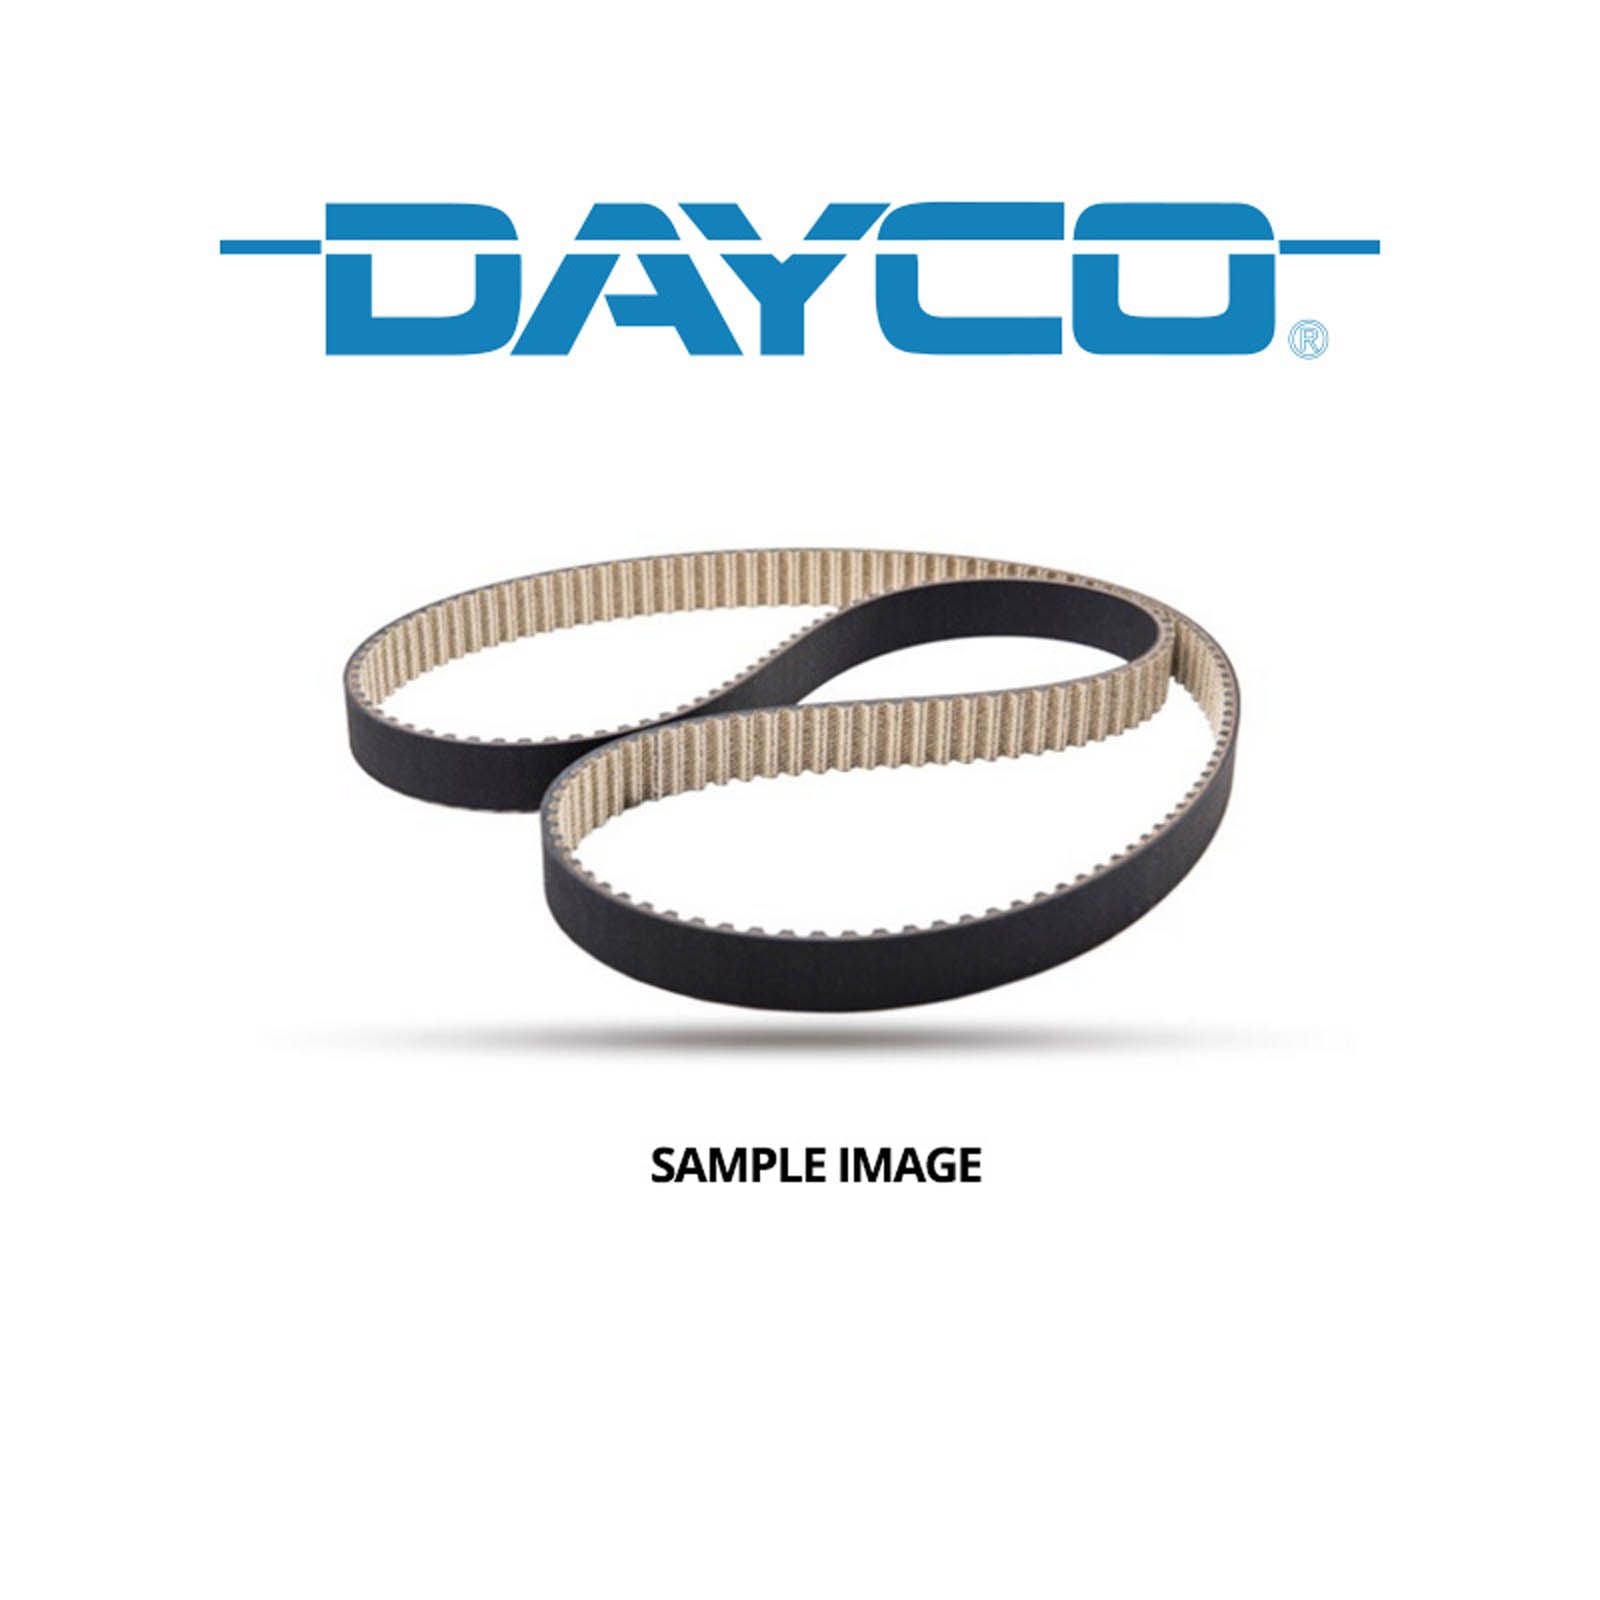 New DAYCO ATV Drive Belt HP 33.0 X 943 HP2035 #ATVDBHP2035